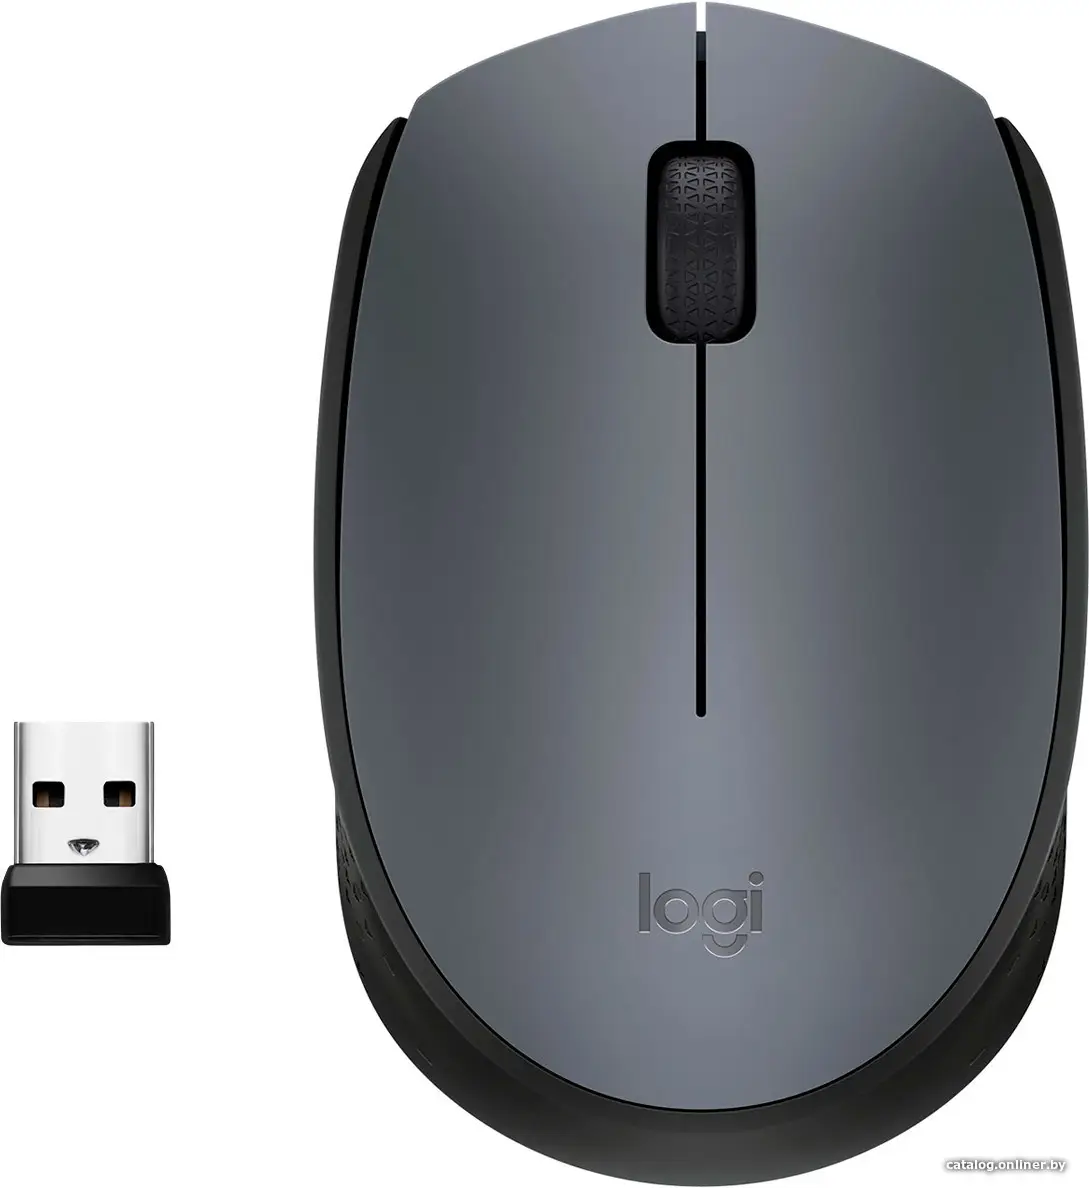 Купить Мышь Logitech M170 Wireless Mouse Gray/Black [910-004642], цена, опт и розница